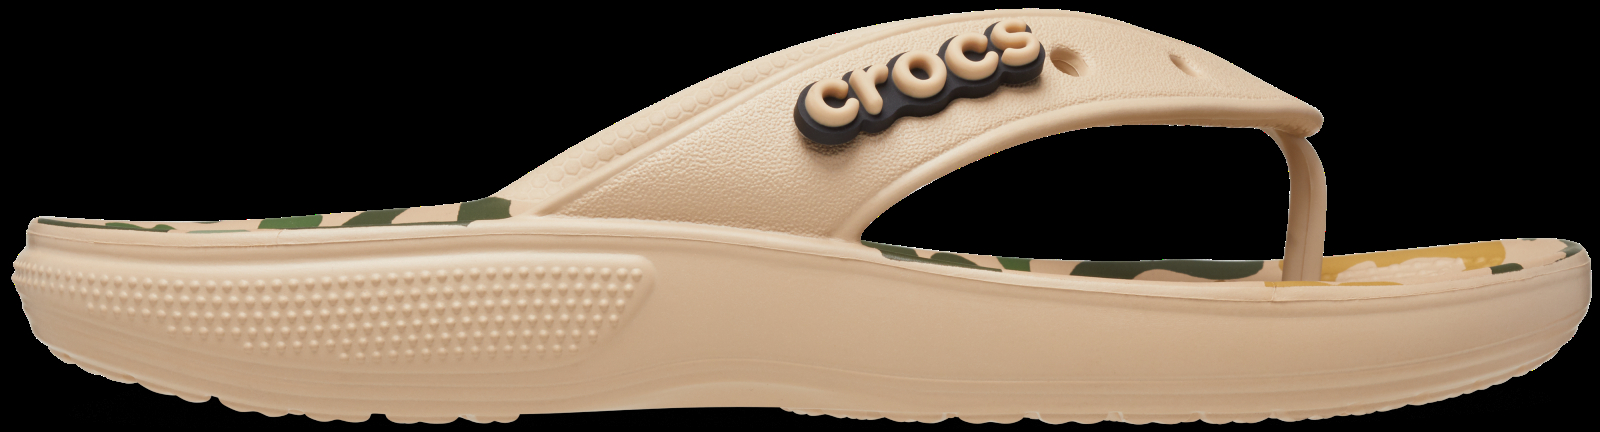 Dámské žabky Crocs CLASSIC Camo béžová 37-38